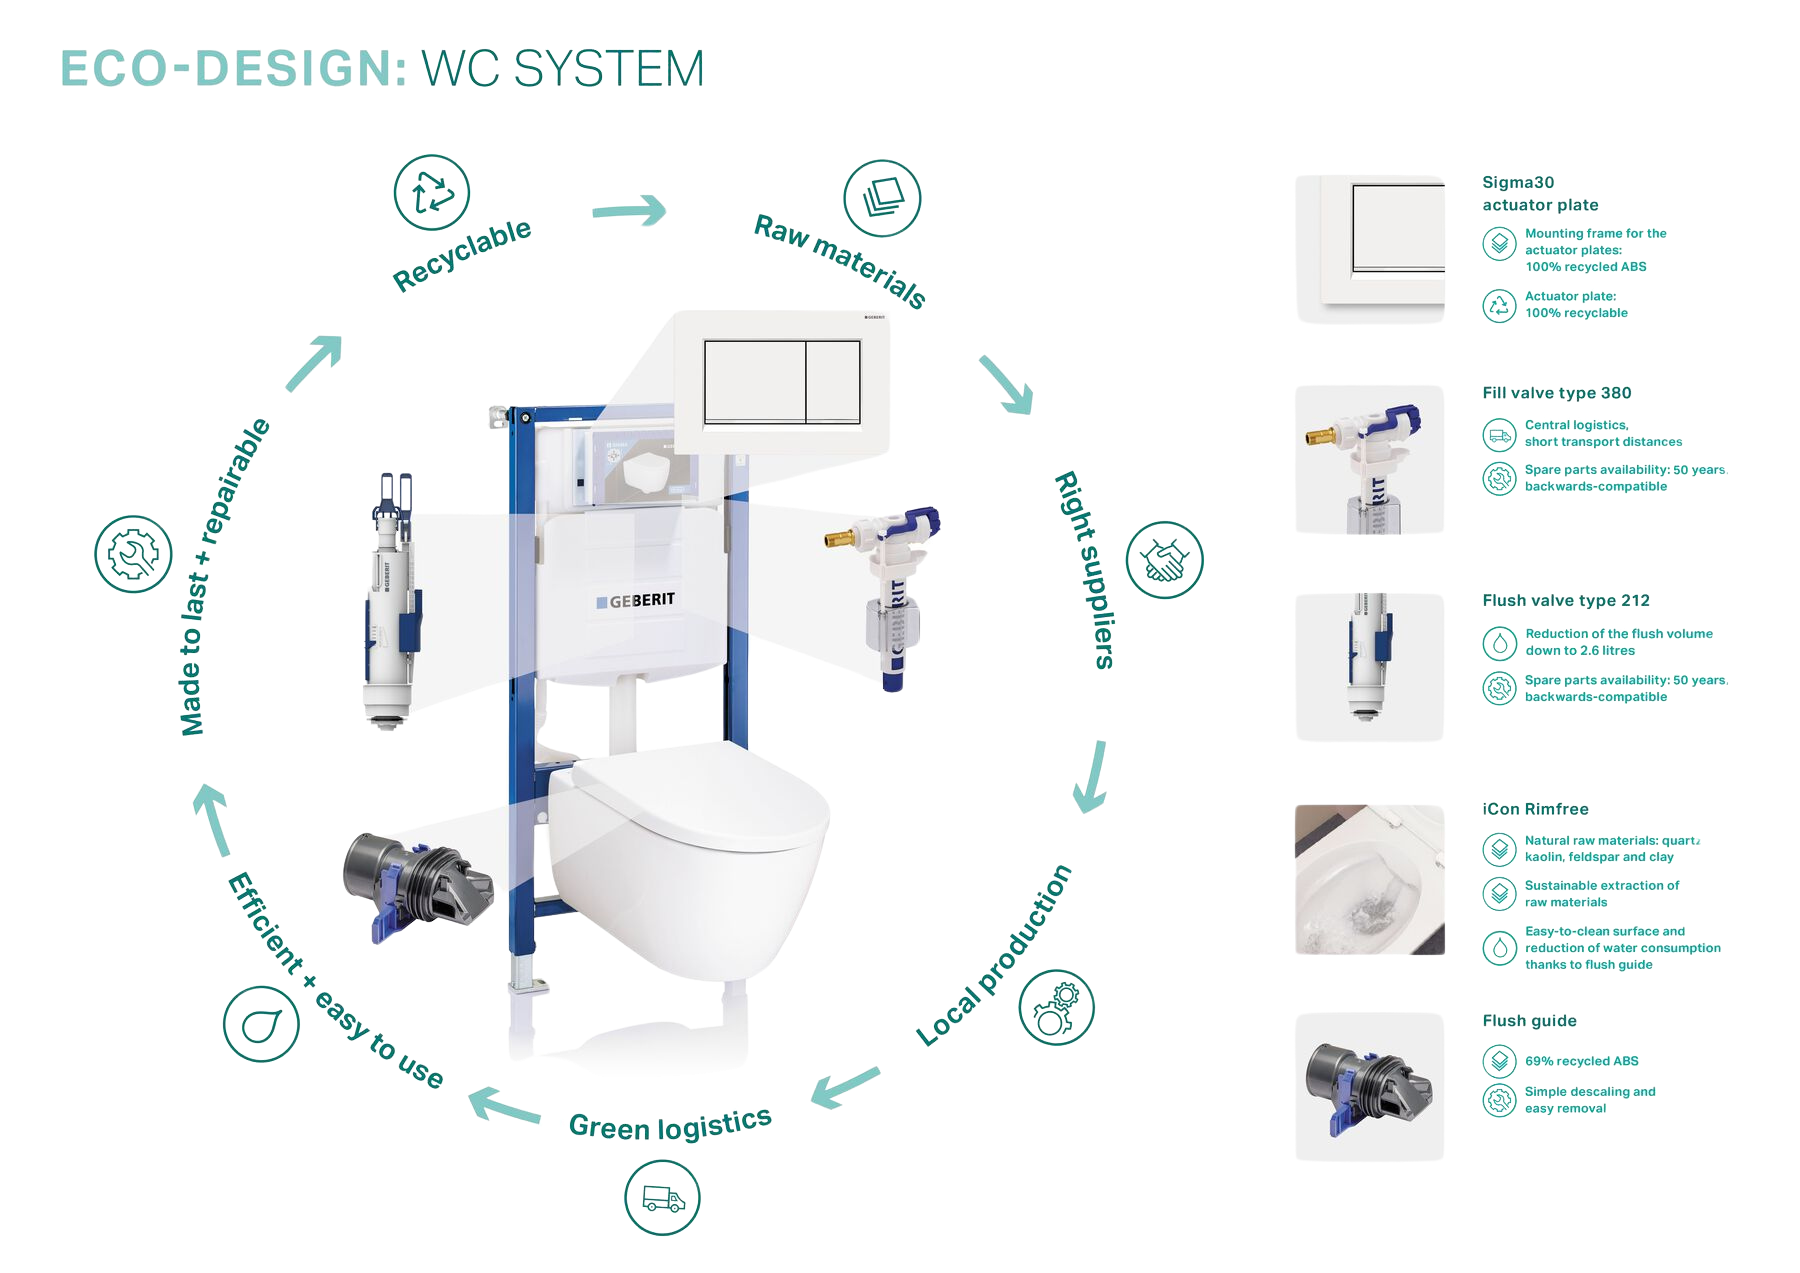 Geberit Eco-Design WC System